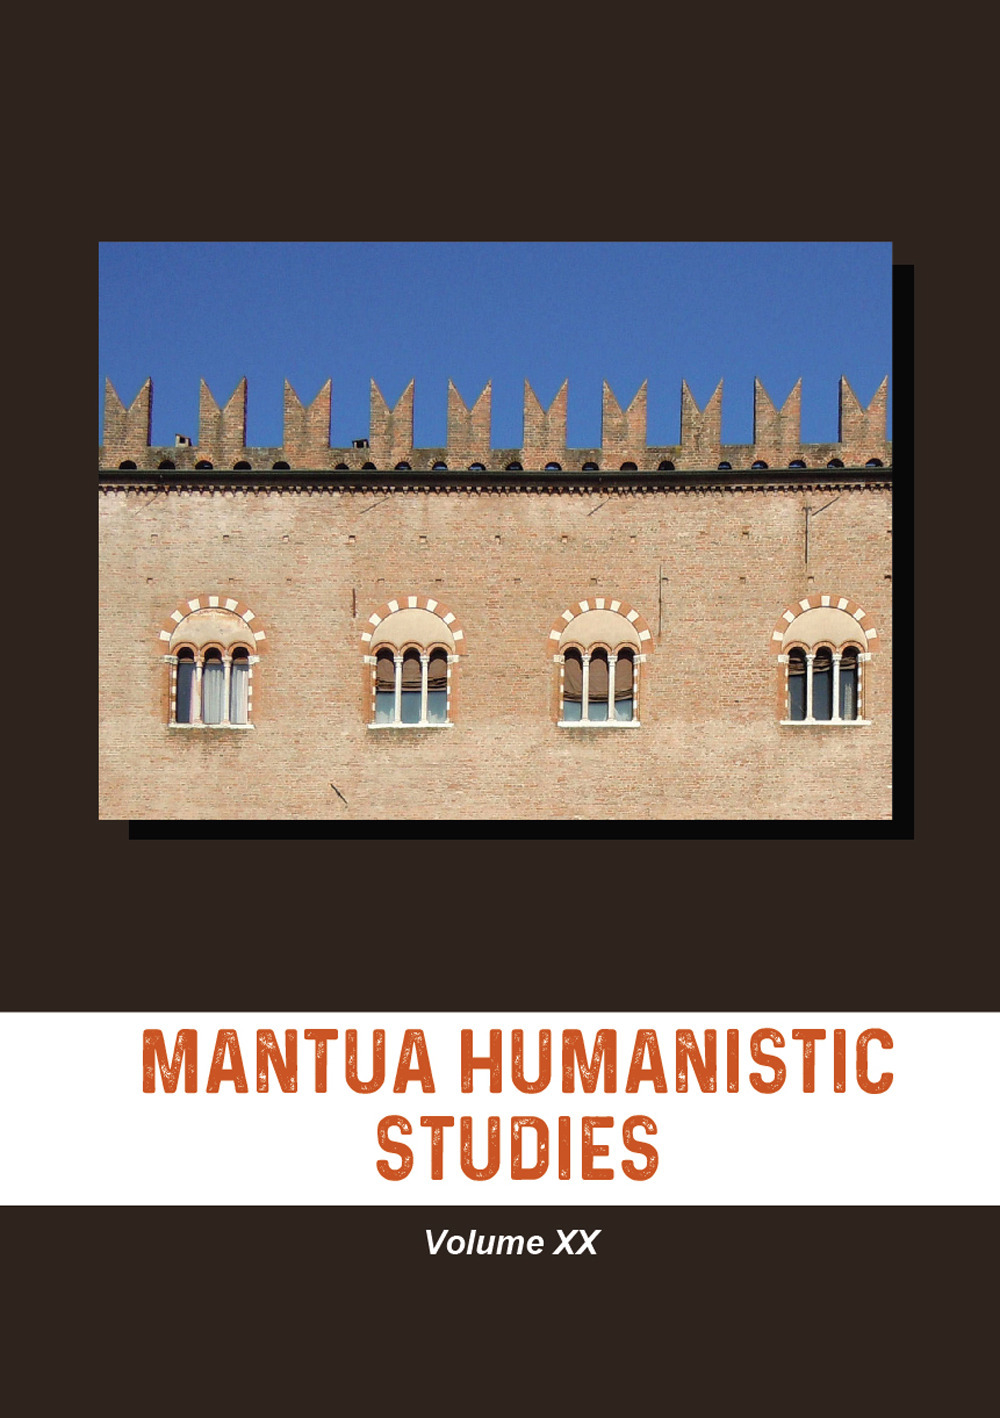 Mantua humanistic studies. Vol. 20